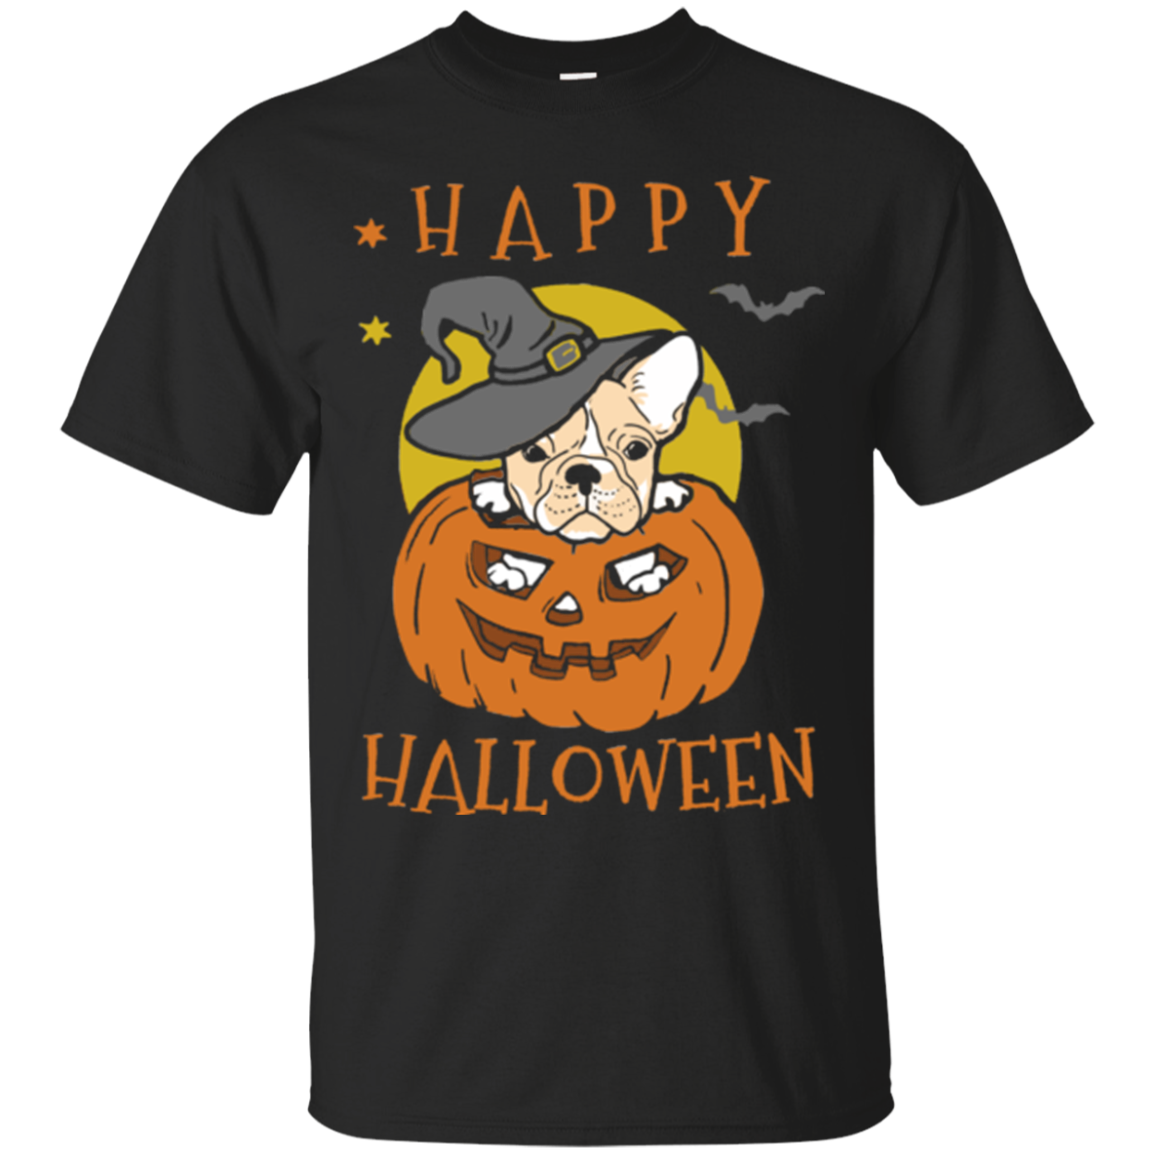 Frenchie Halloween Shirts Happy Halloween T shirts - Teesmiley